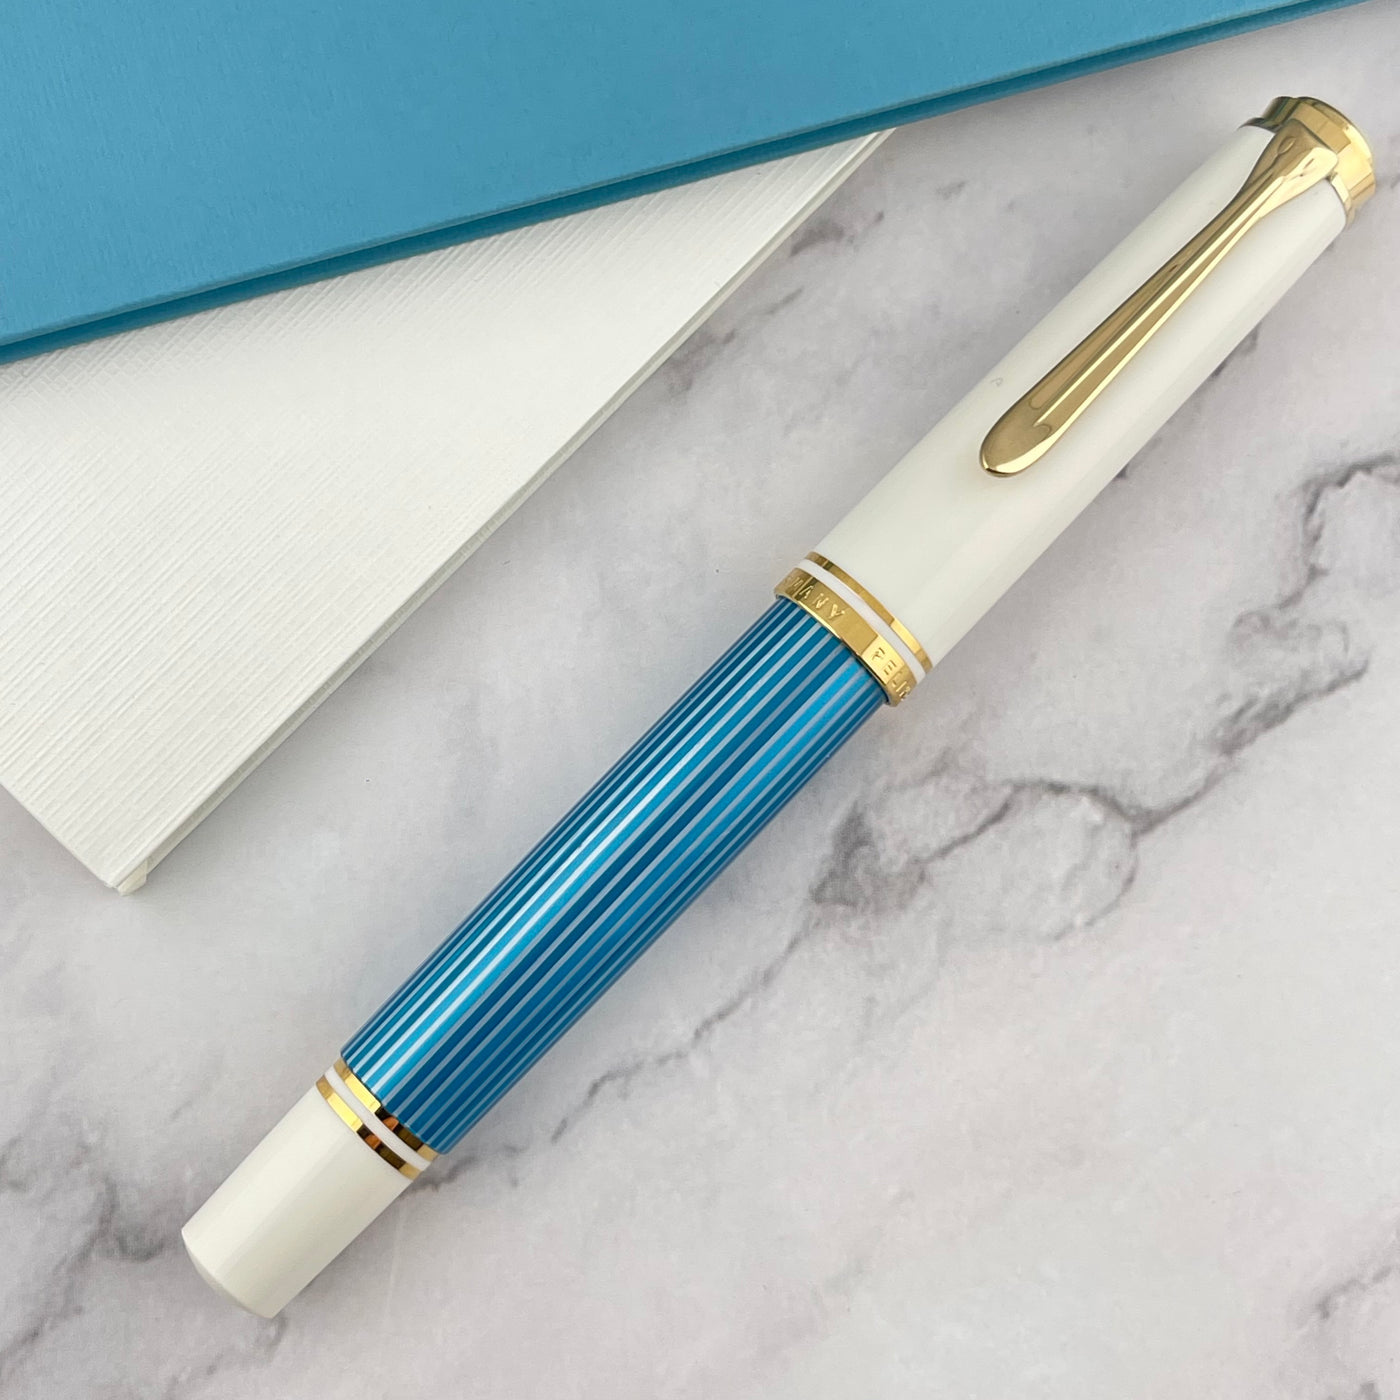 Pelikan Souveran M600 Fountain pen - Turquoise / White (Special Edition) (Pre-order)